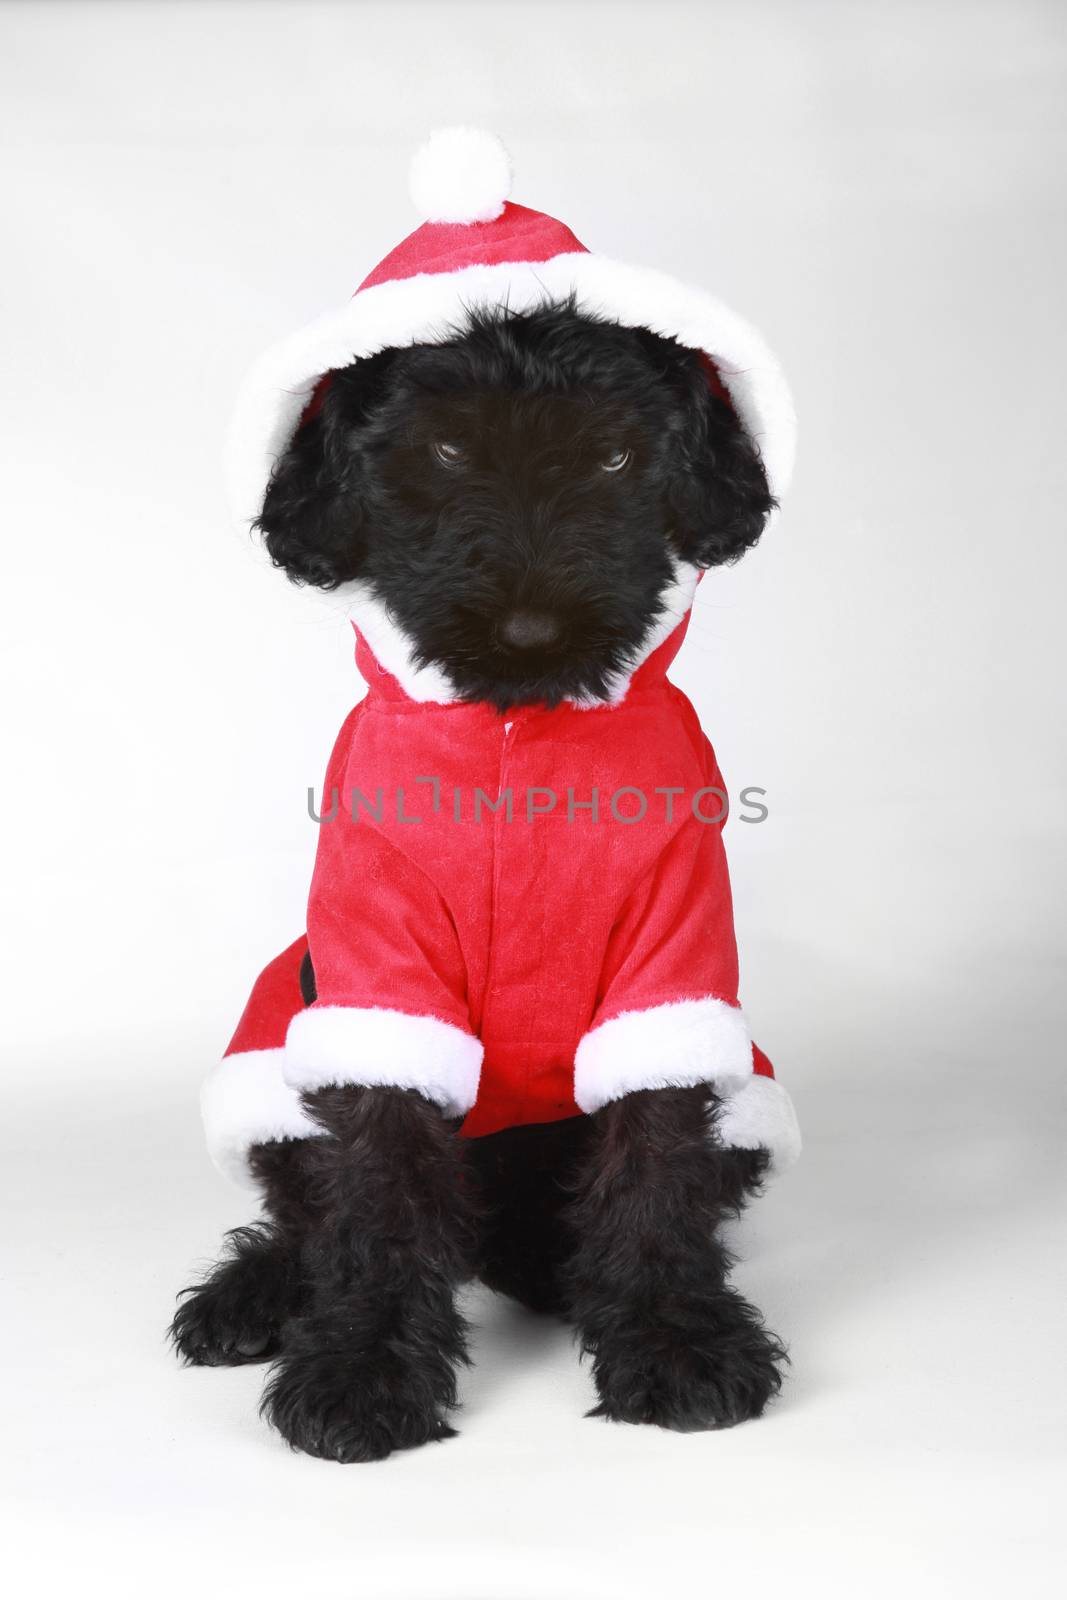 Upset Black Russian Terrier Puppy in Santa Suit  by tobkatrina